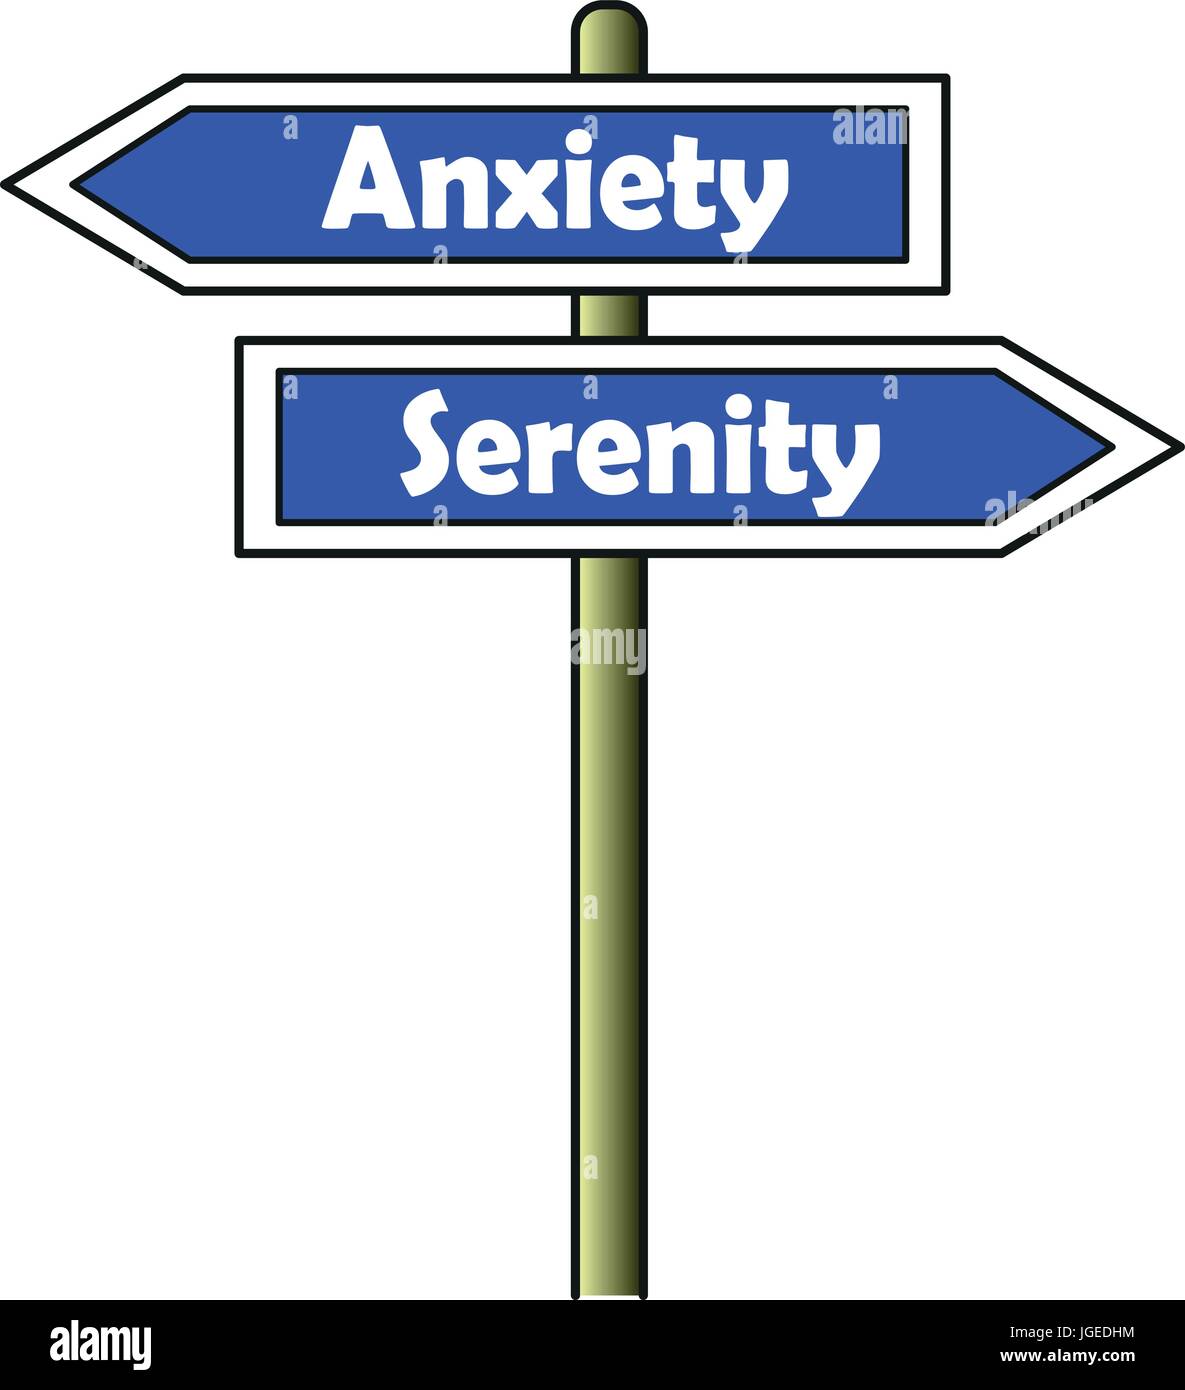 Anxiety - Serenity street sign - Original Stock Vector